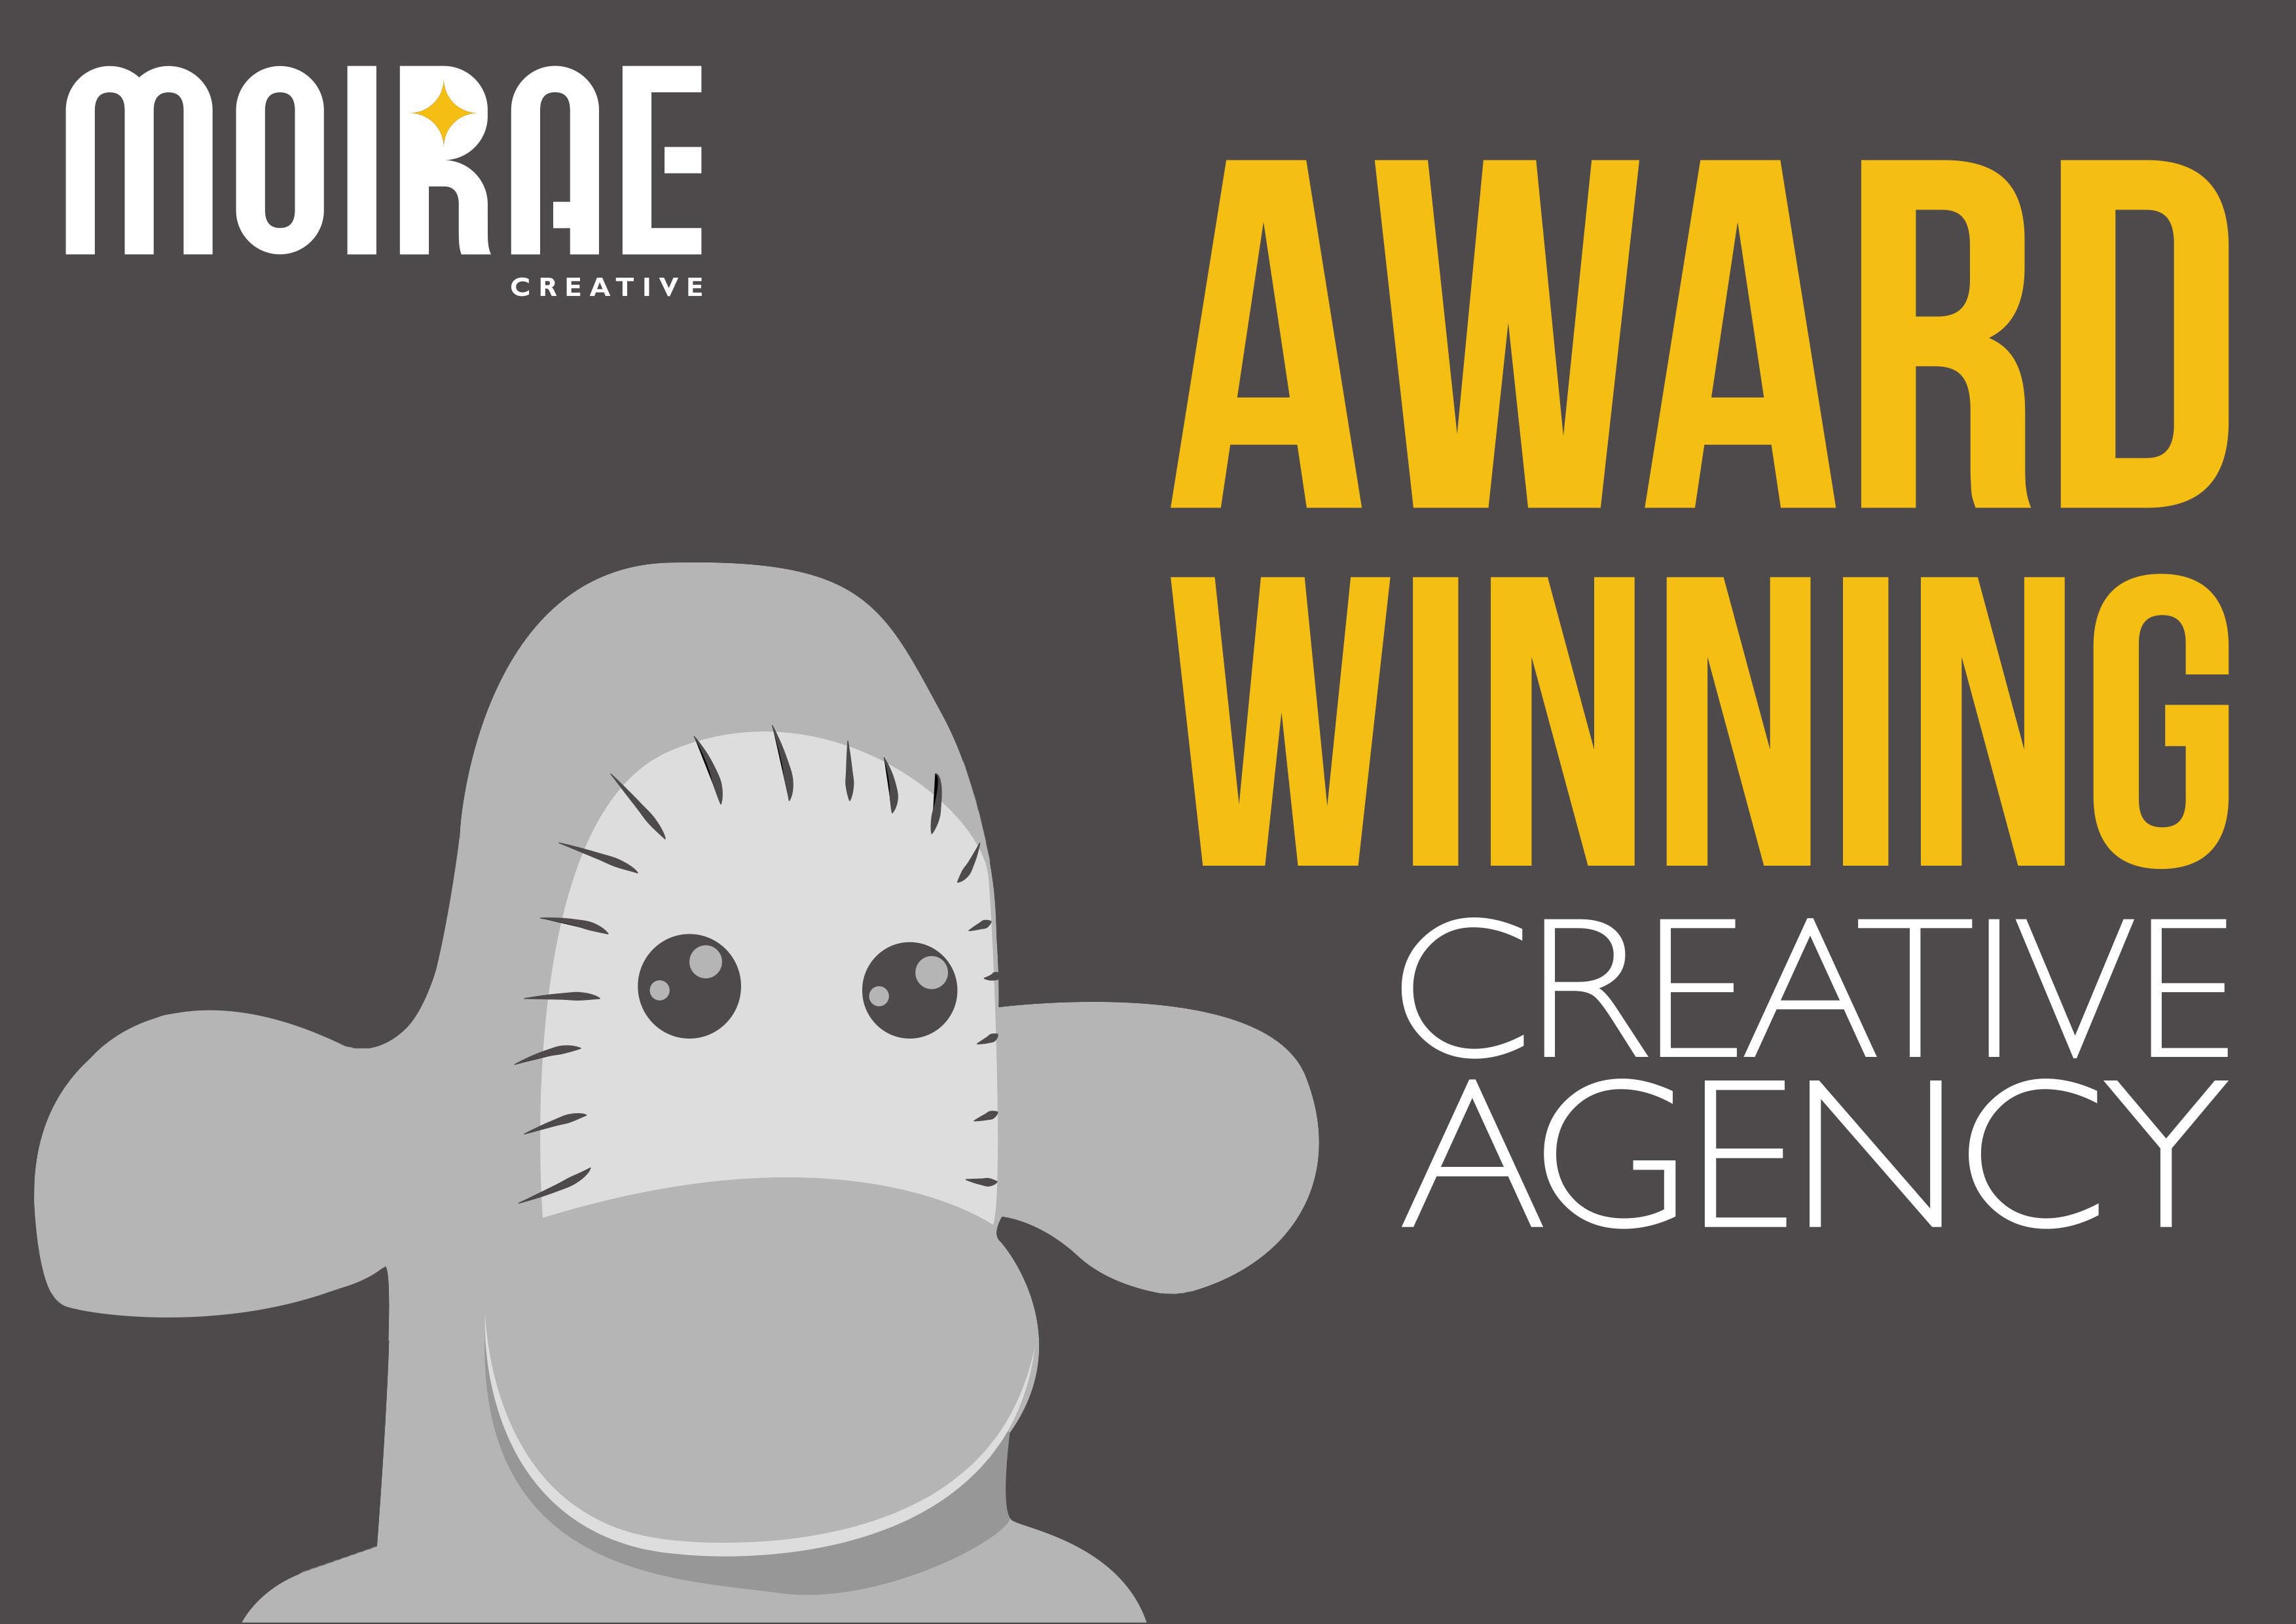 Poster with Moirae Creative logo on top left, Moirae monkey mascot, bottom left, Award winning creative agency on the right.